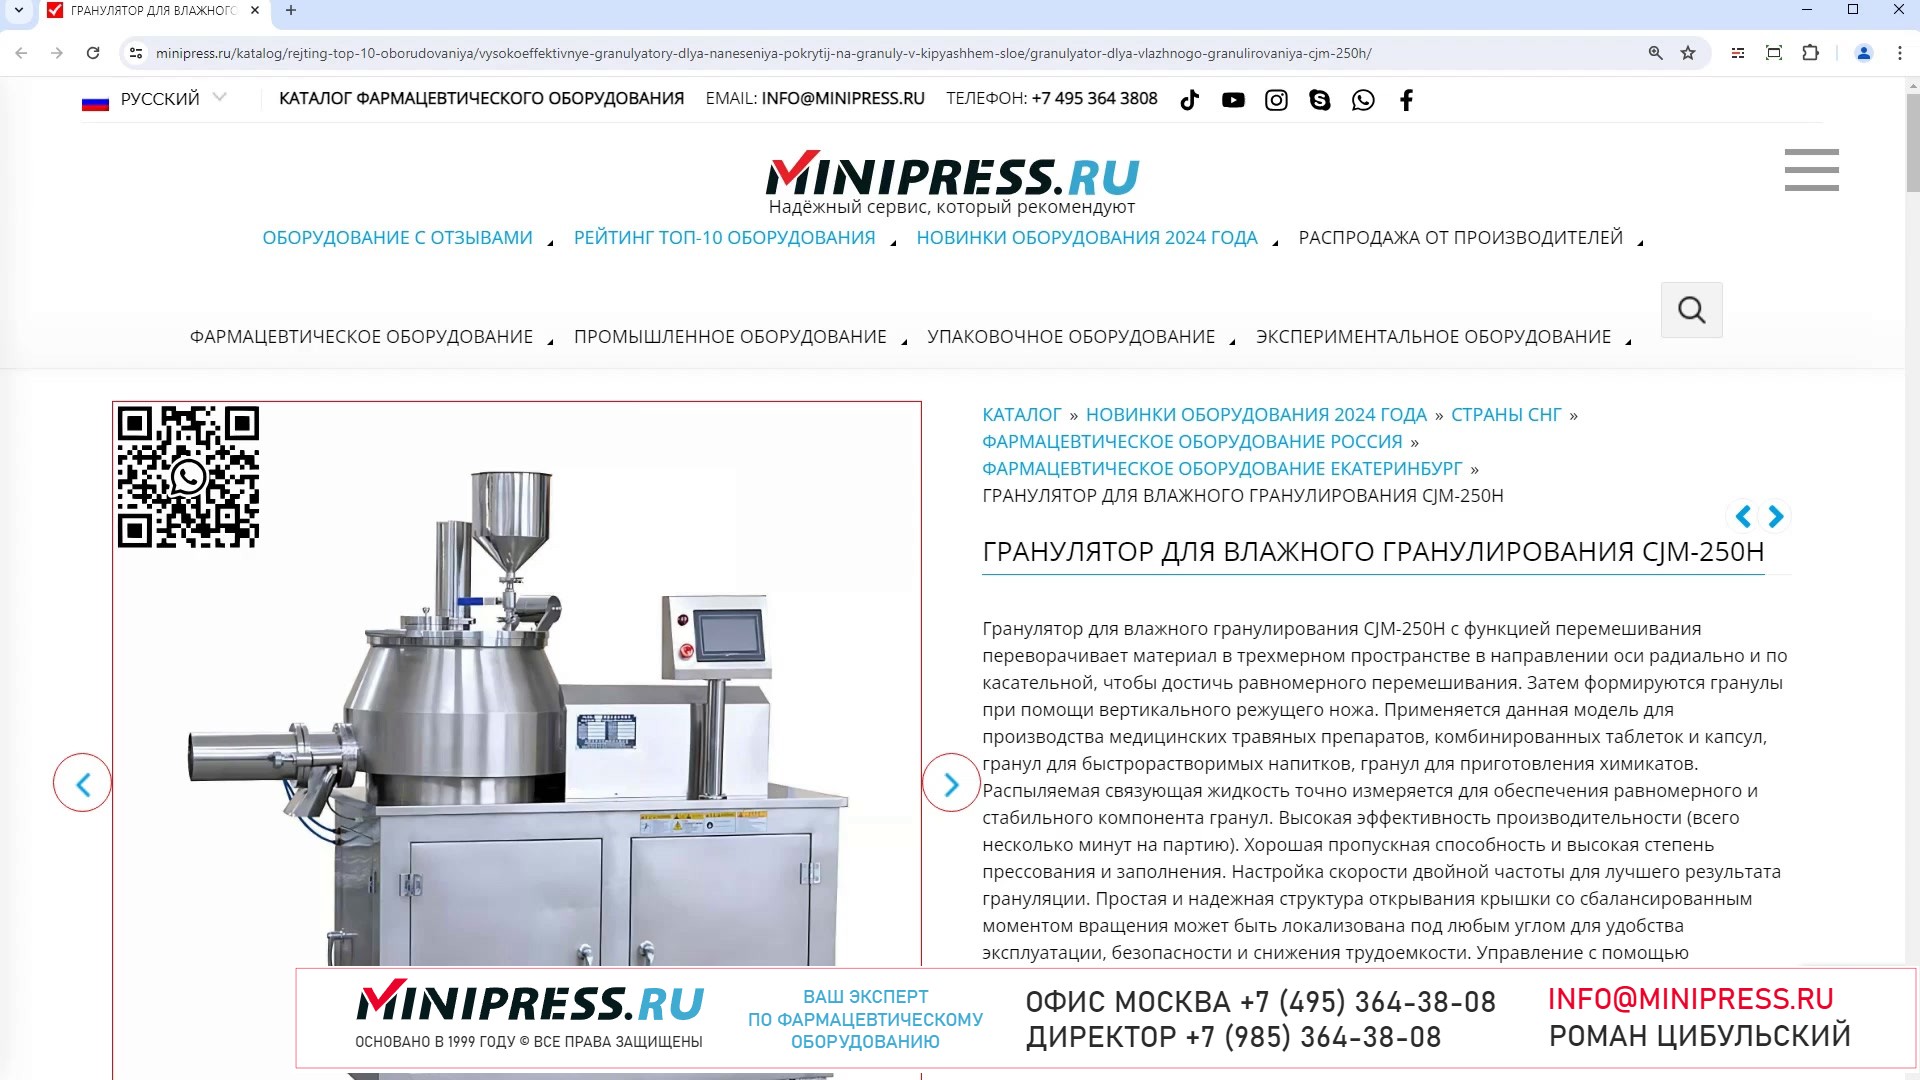 Minipress.ru Гранулятор для влажного гранулирования CJM-250H